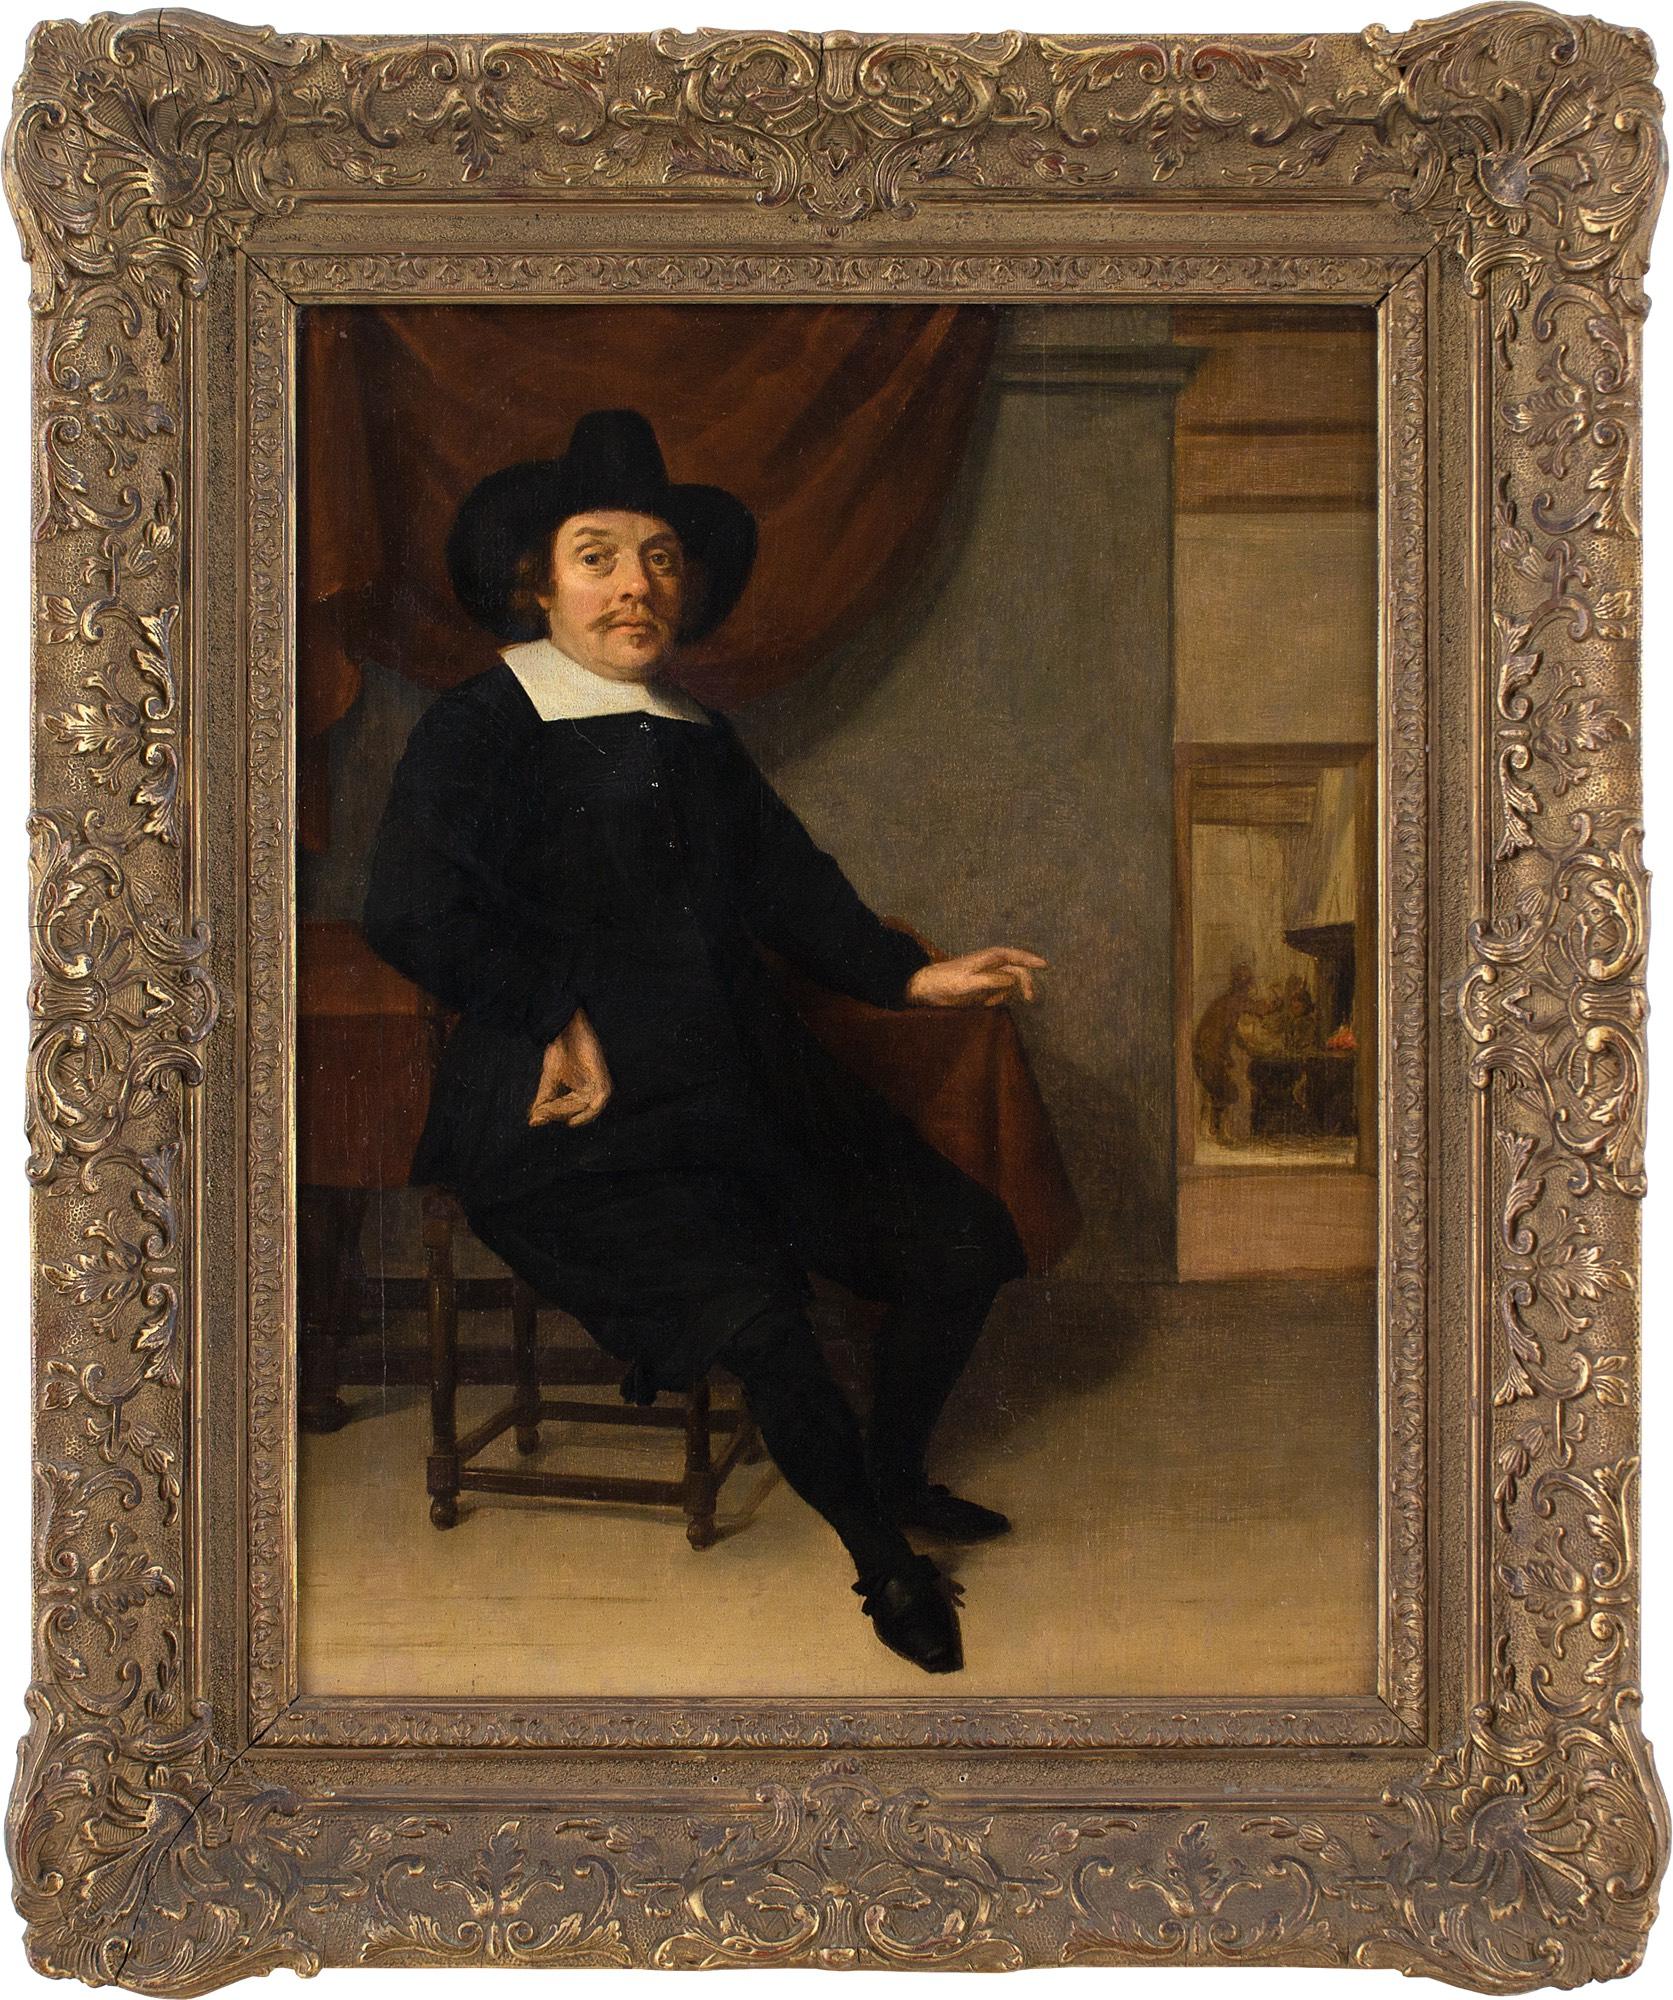 Unknown Interior Painting - 18th-Century Dutch School, Portrait Of A Seated 17th-Century Gentleman